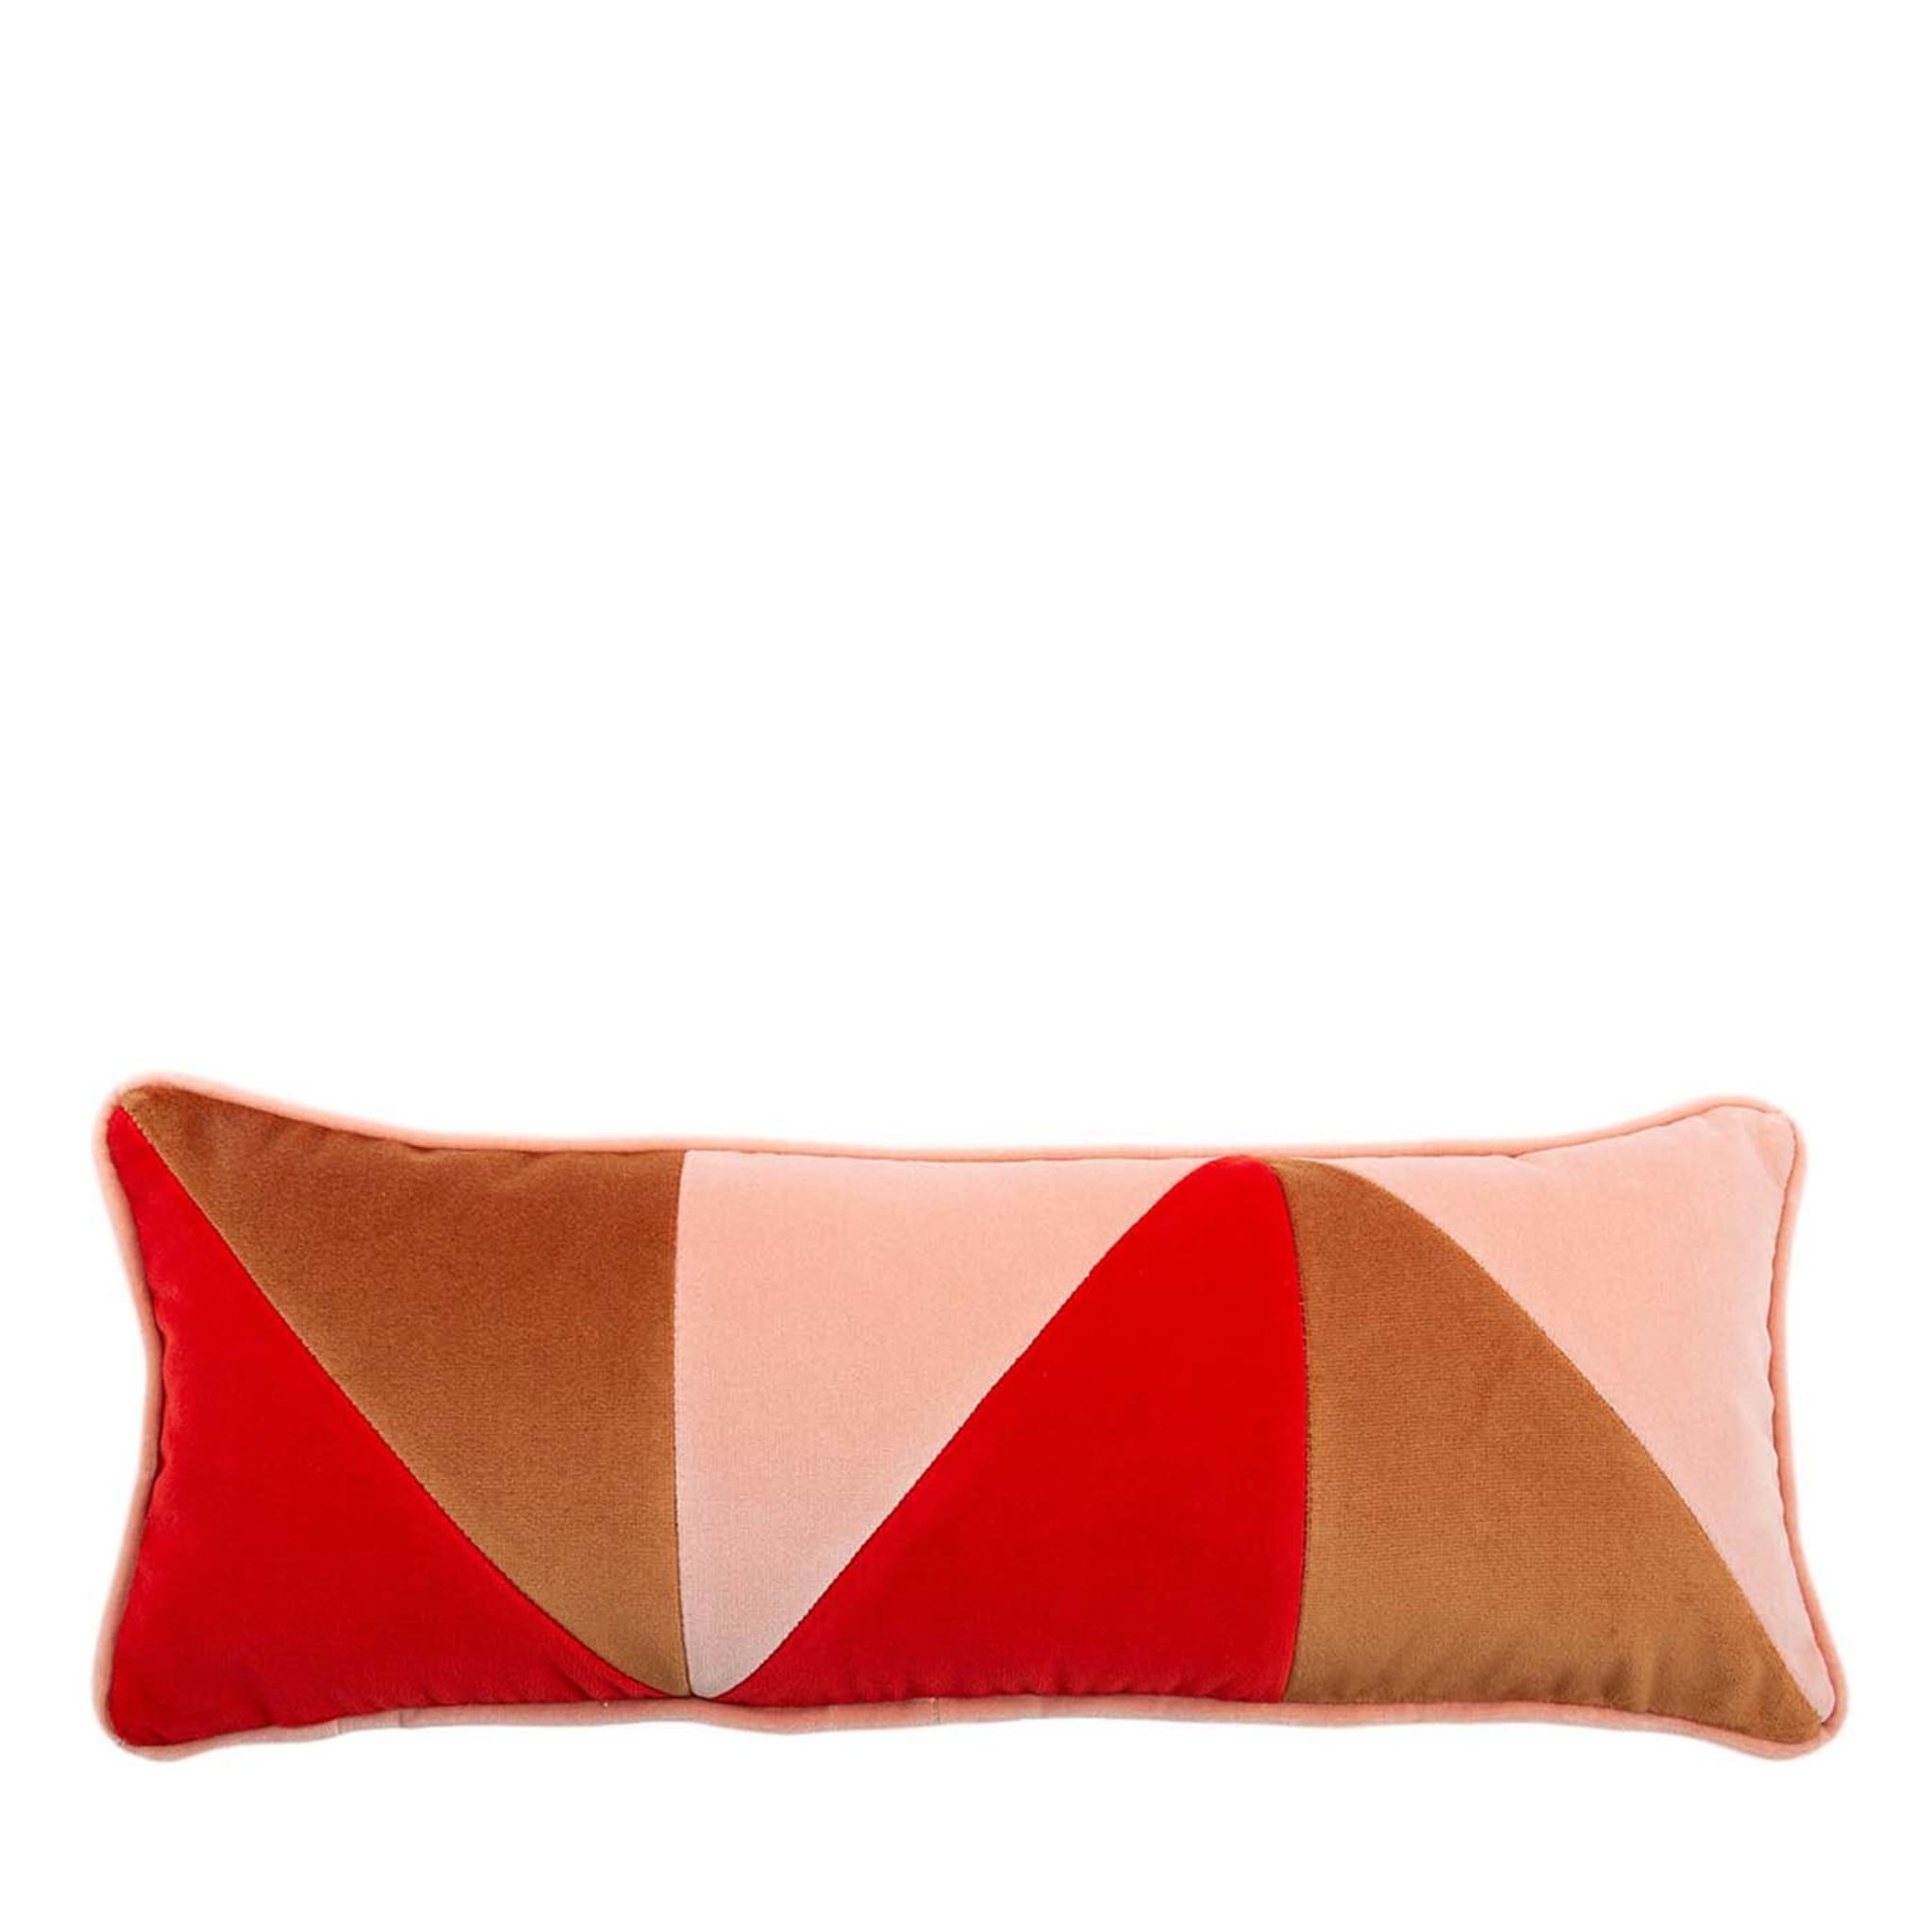 Rectangular Multi-Colored Throw Cushion - Main view